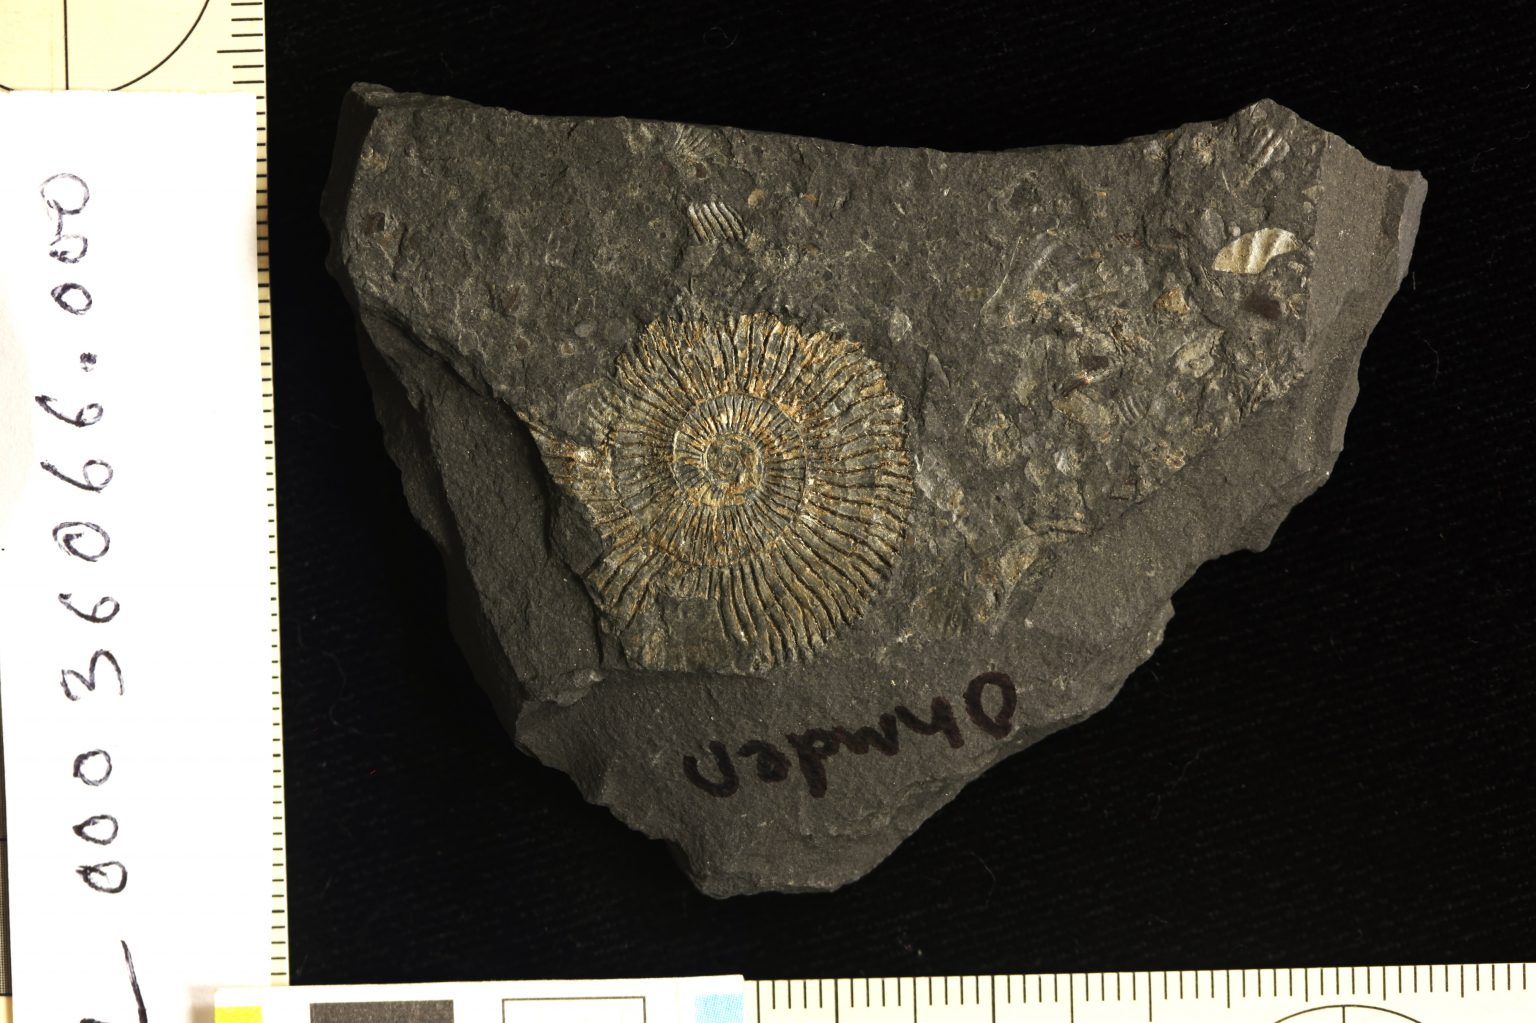 Newswise: Ammonite-specimen-from-the-Ohmden-quarry-Posidonia-Shale-Lagerstatte.-Photo-Credits_-Sinjini-Sinha-1536x1023.jpg